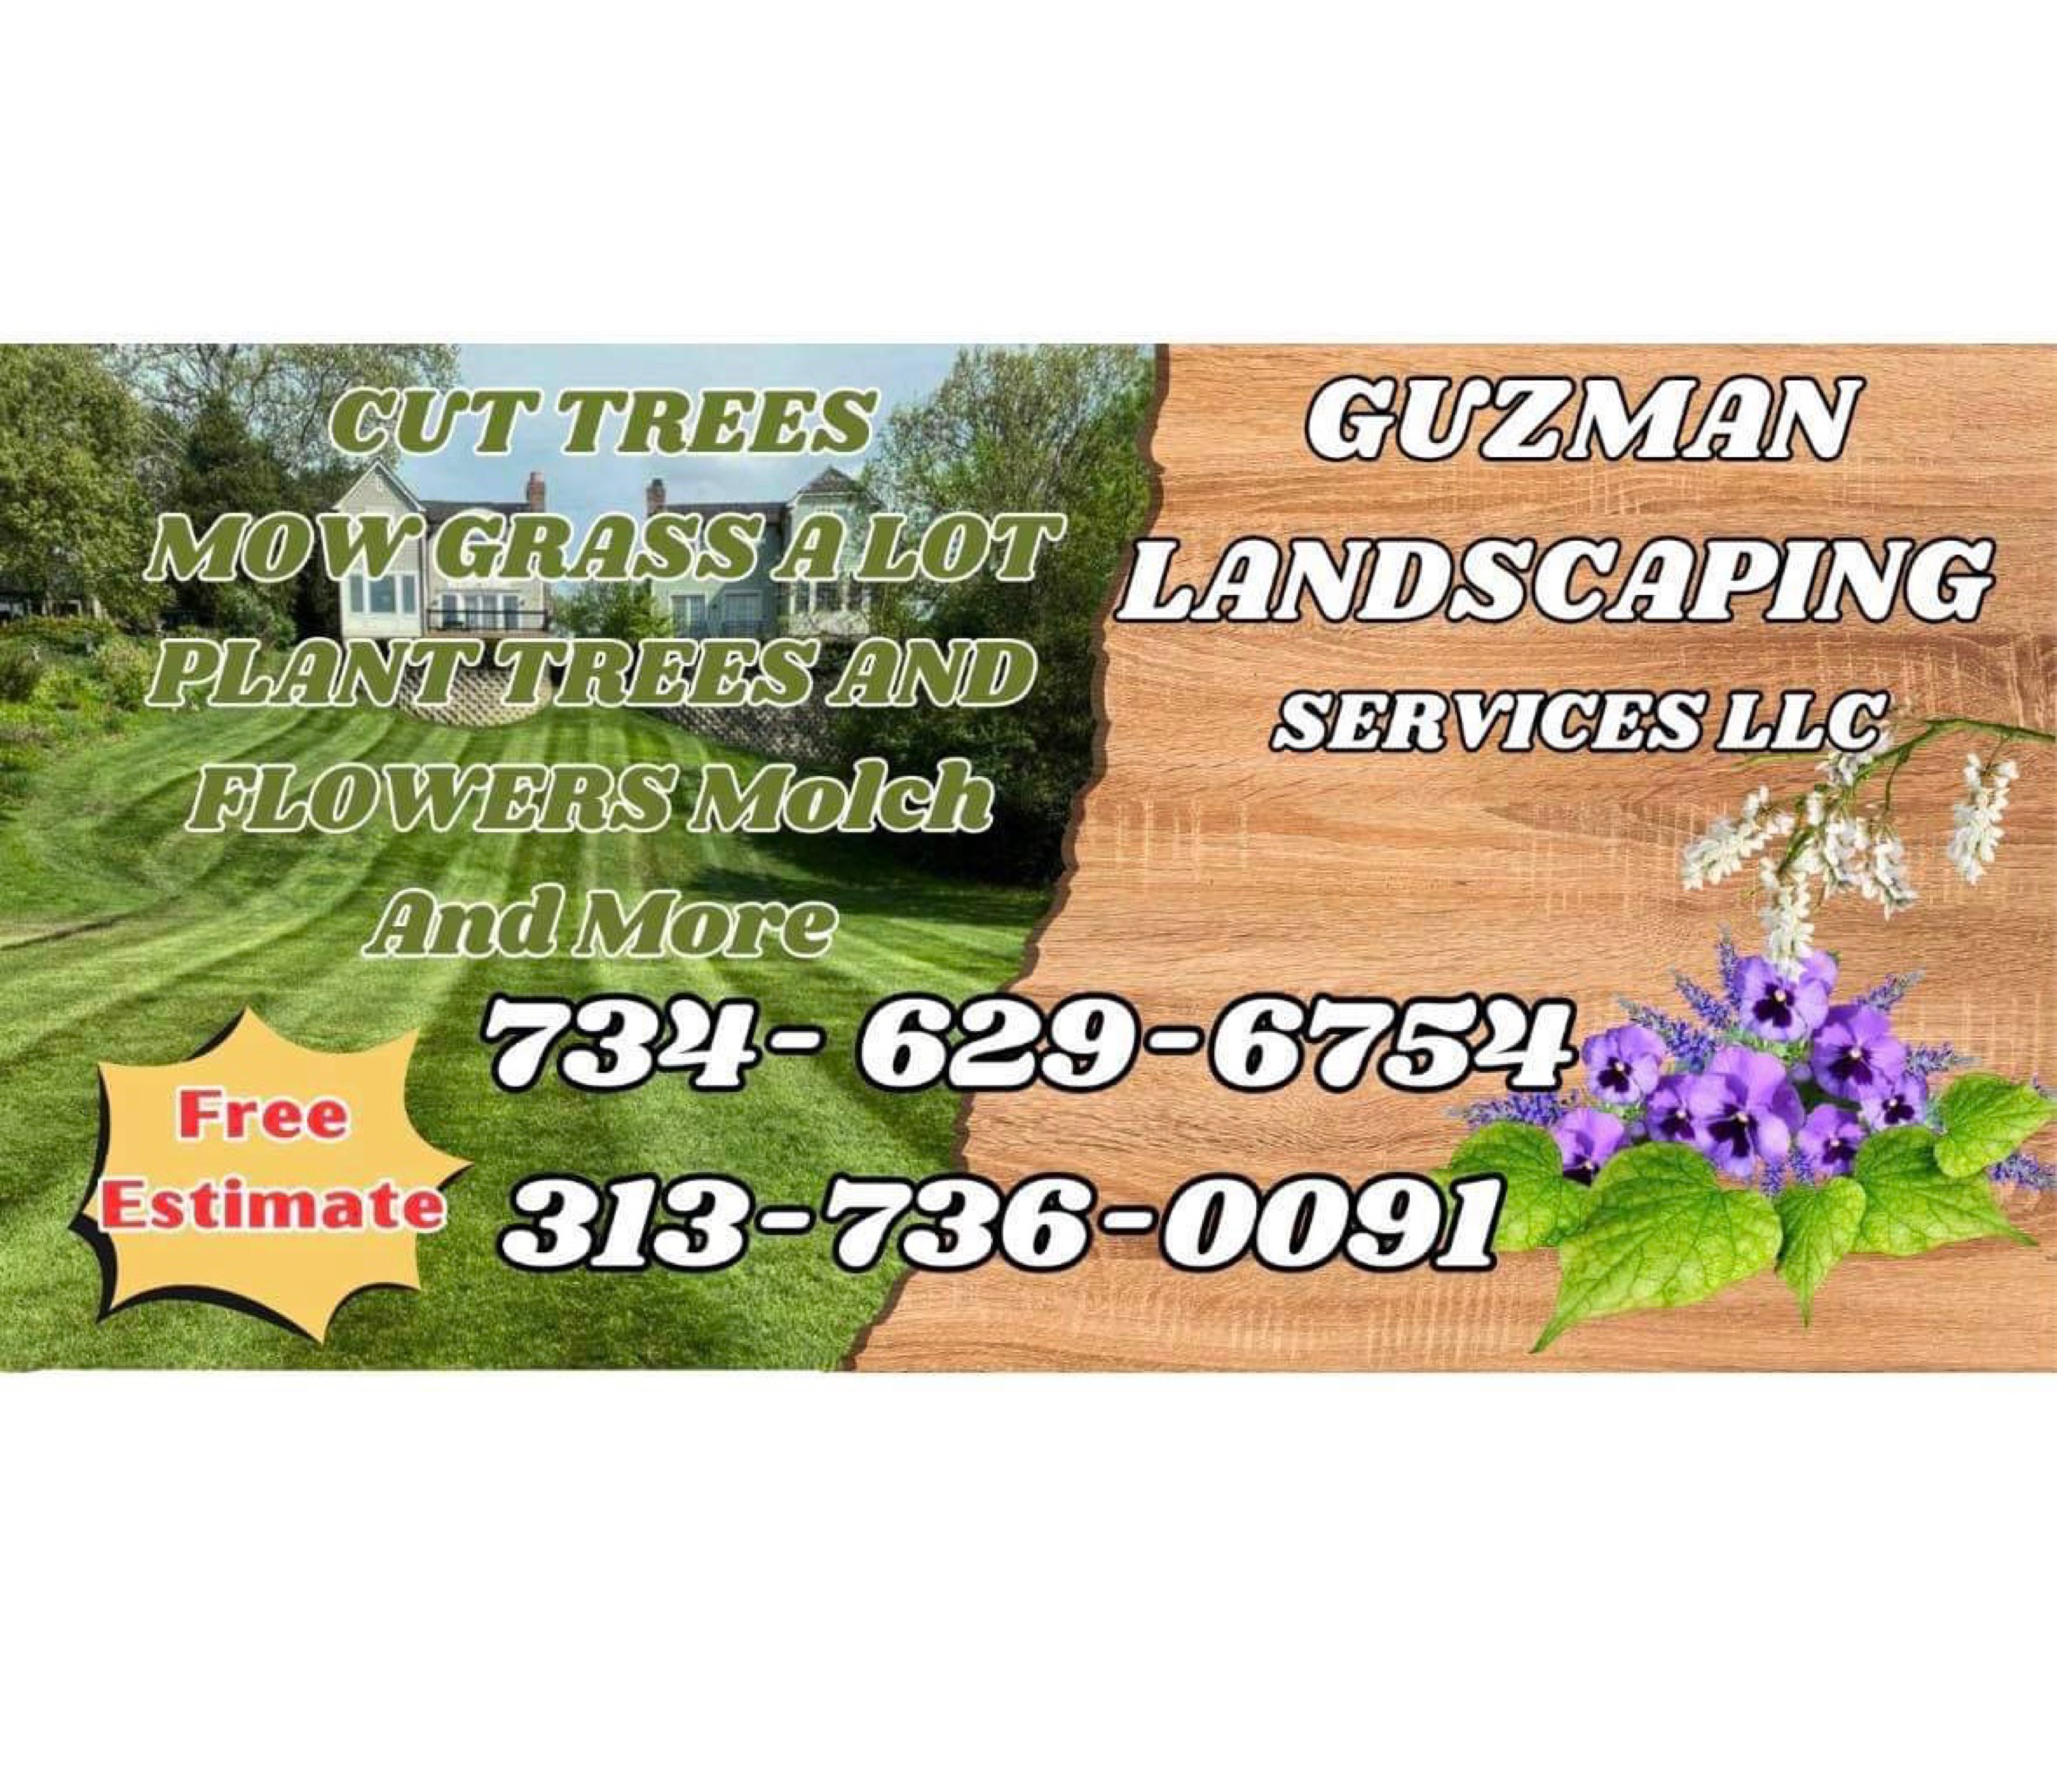 Guzman Landscaping Services, LLC Logo